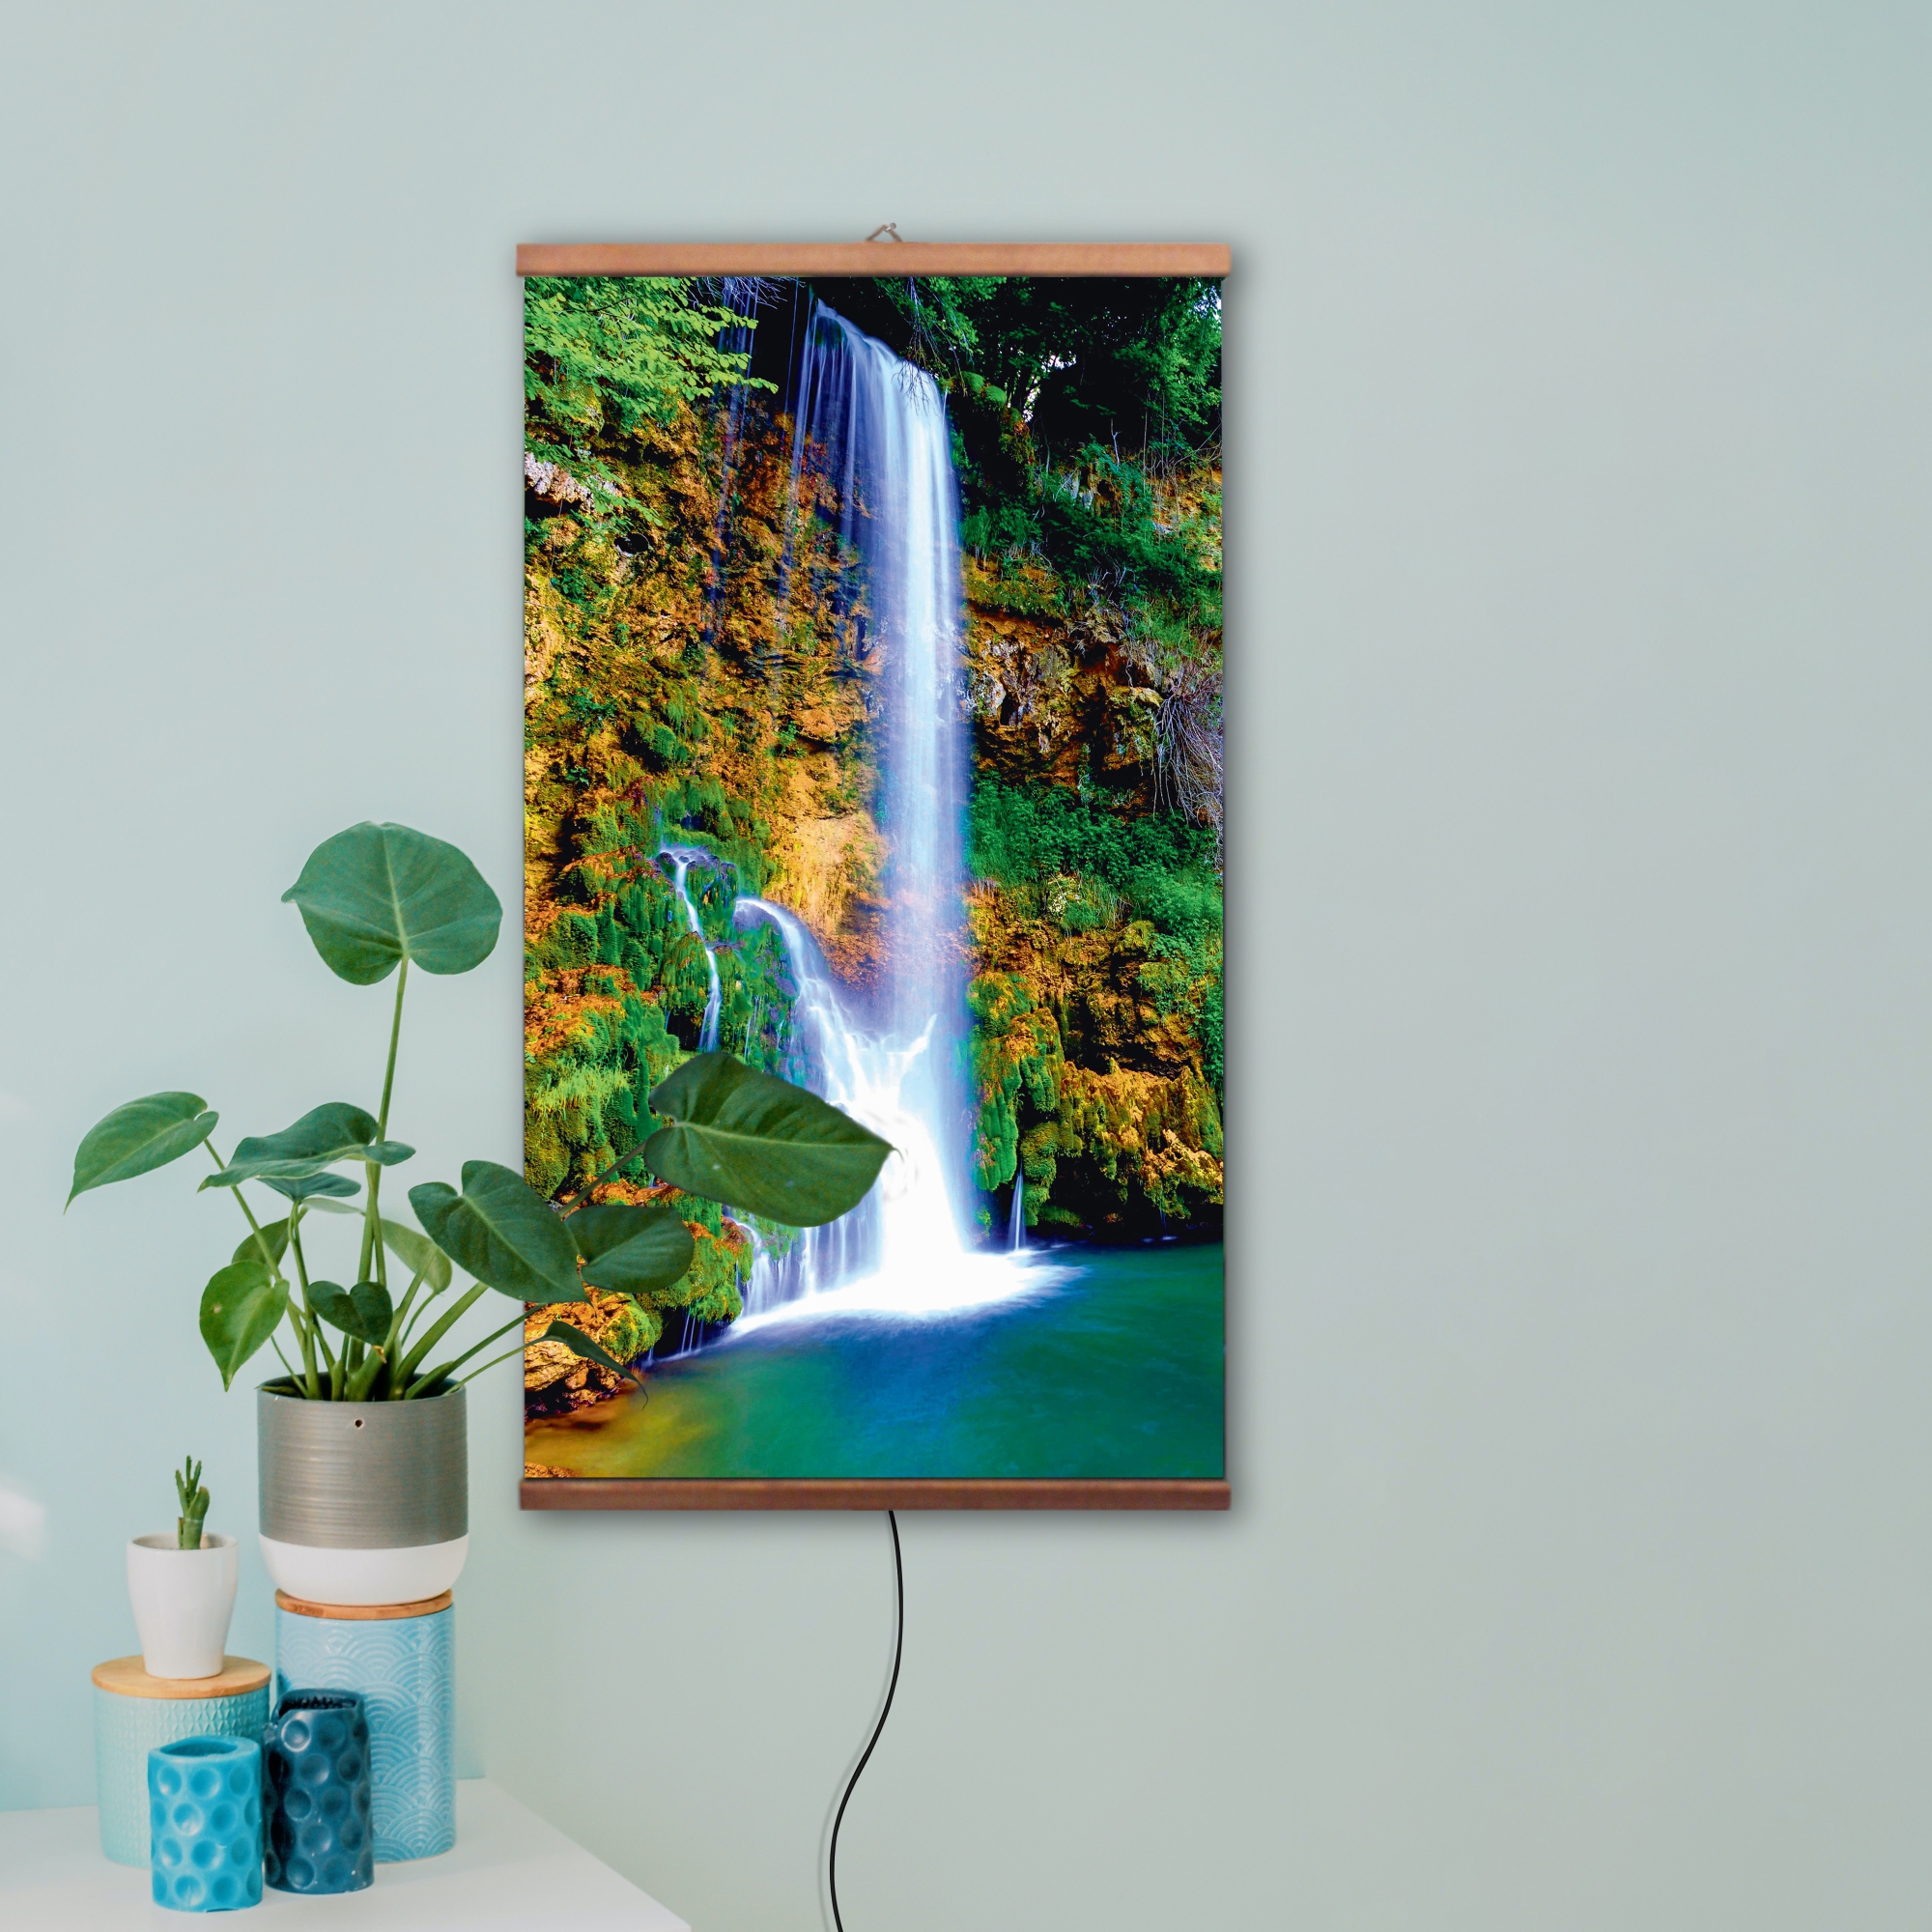 Infrarotheizung 500 Watt Bildheizung Heizbild Serie Home Kamin Infrarot Wandheizung Heizer Bild Wasserfall